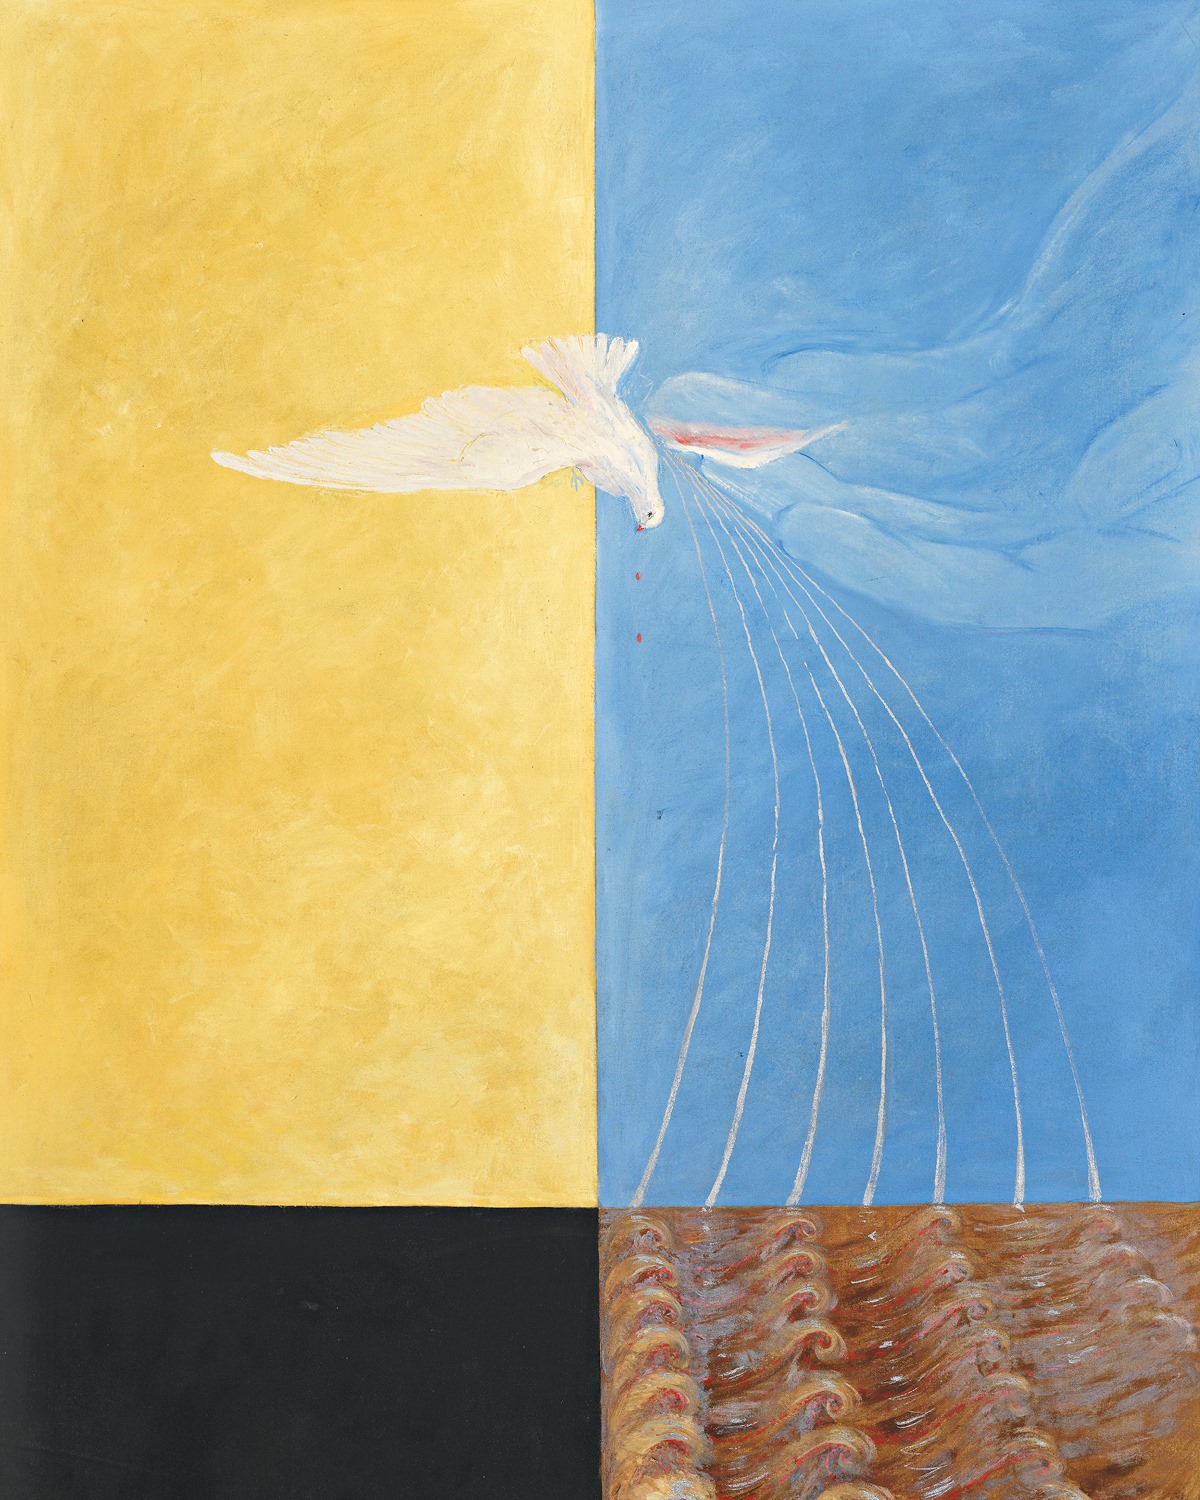 कबूतर नंबर 4 by Hilma af Klint - 1915 - 152 x 115.5 cm 